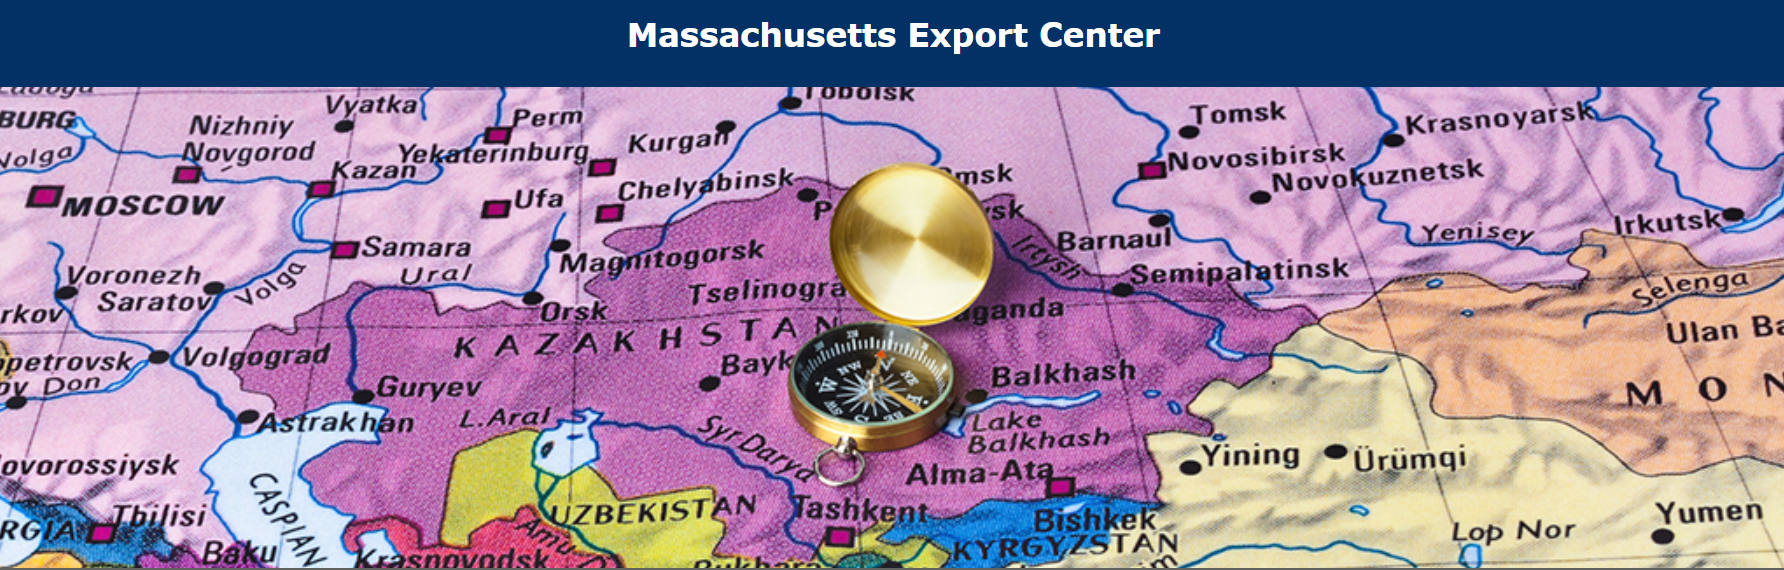 mass export step grant